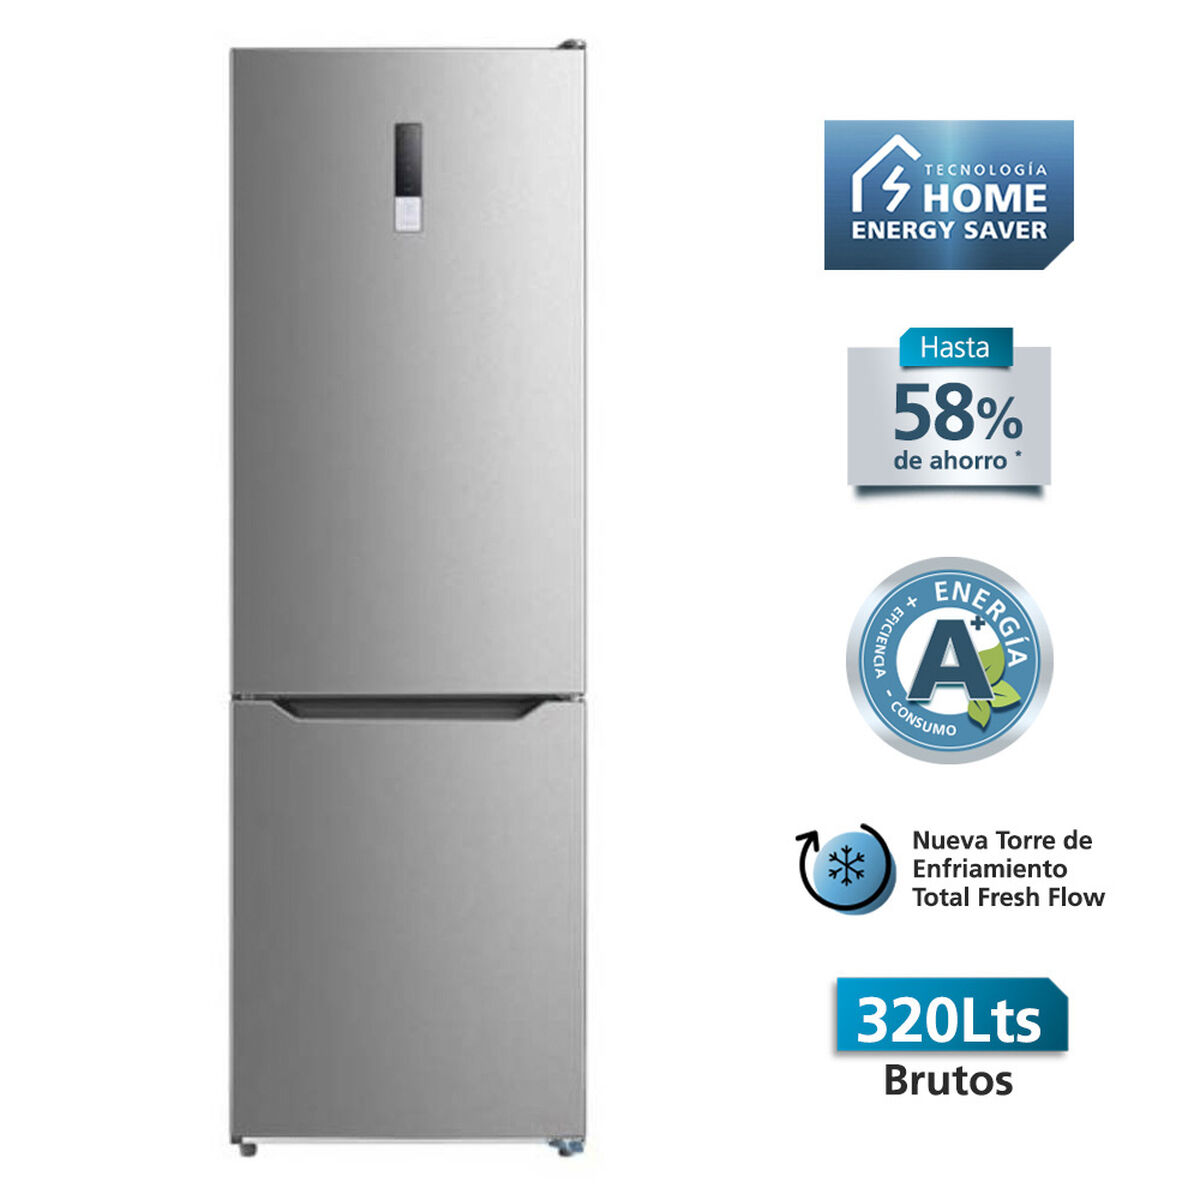 Refrigerador No Frost Mabe RMB302PXLR 290 lts.